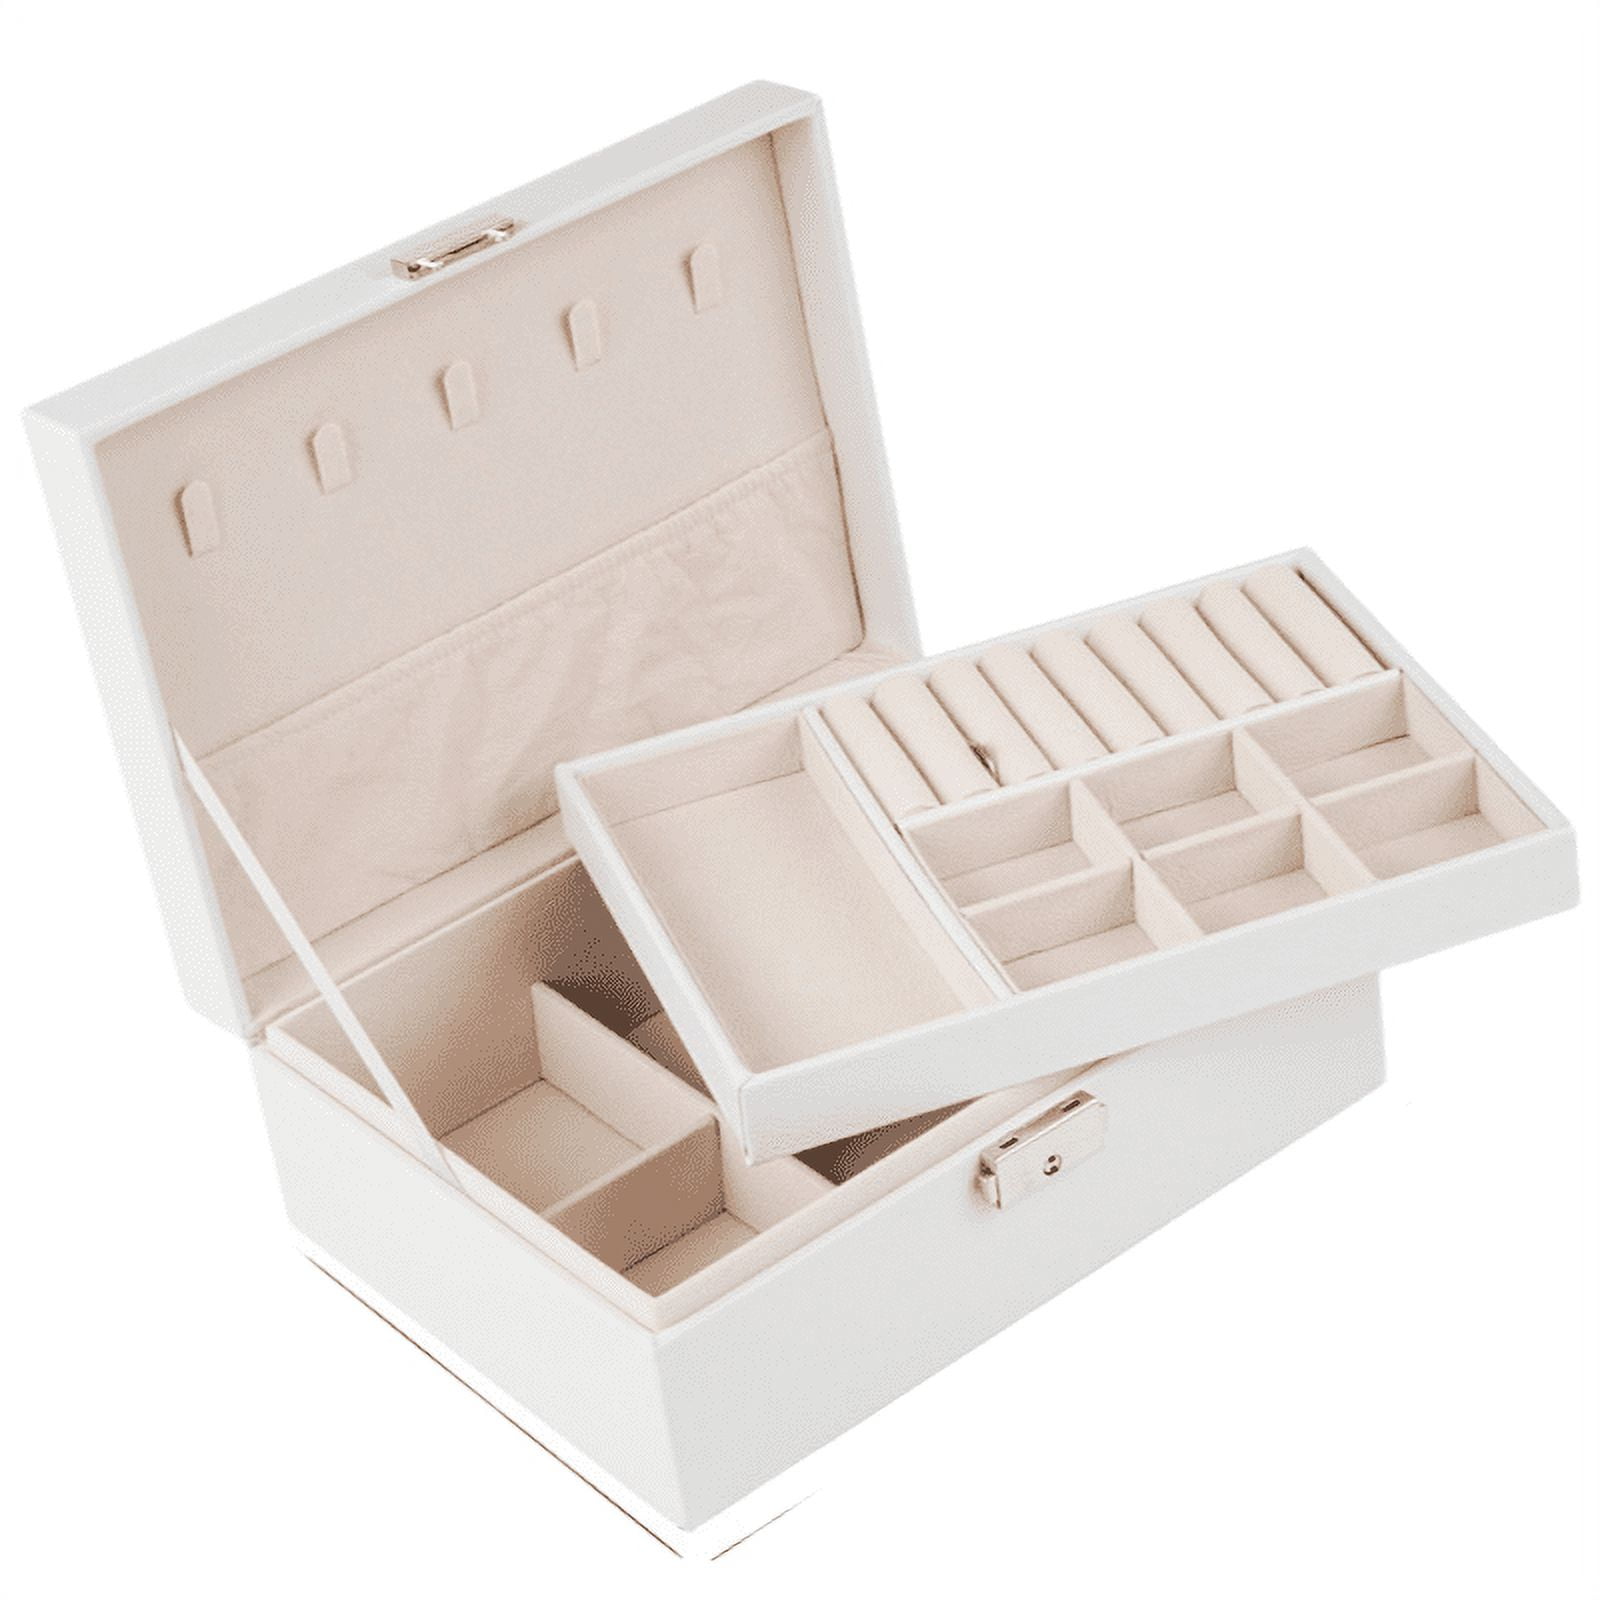 Rush Jewelry Box Organizer, 2-Layer Lockable Jewelry Box, Soft